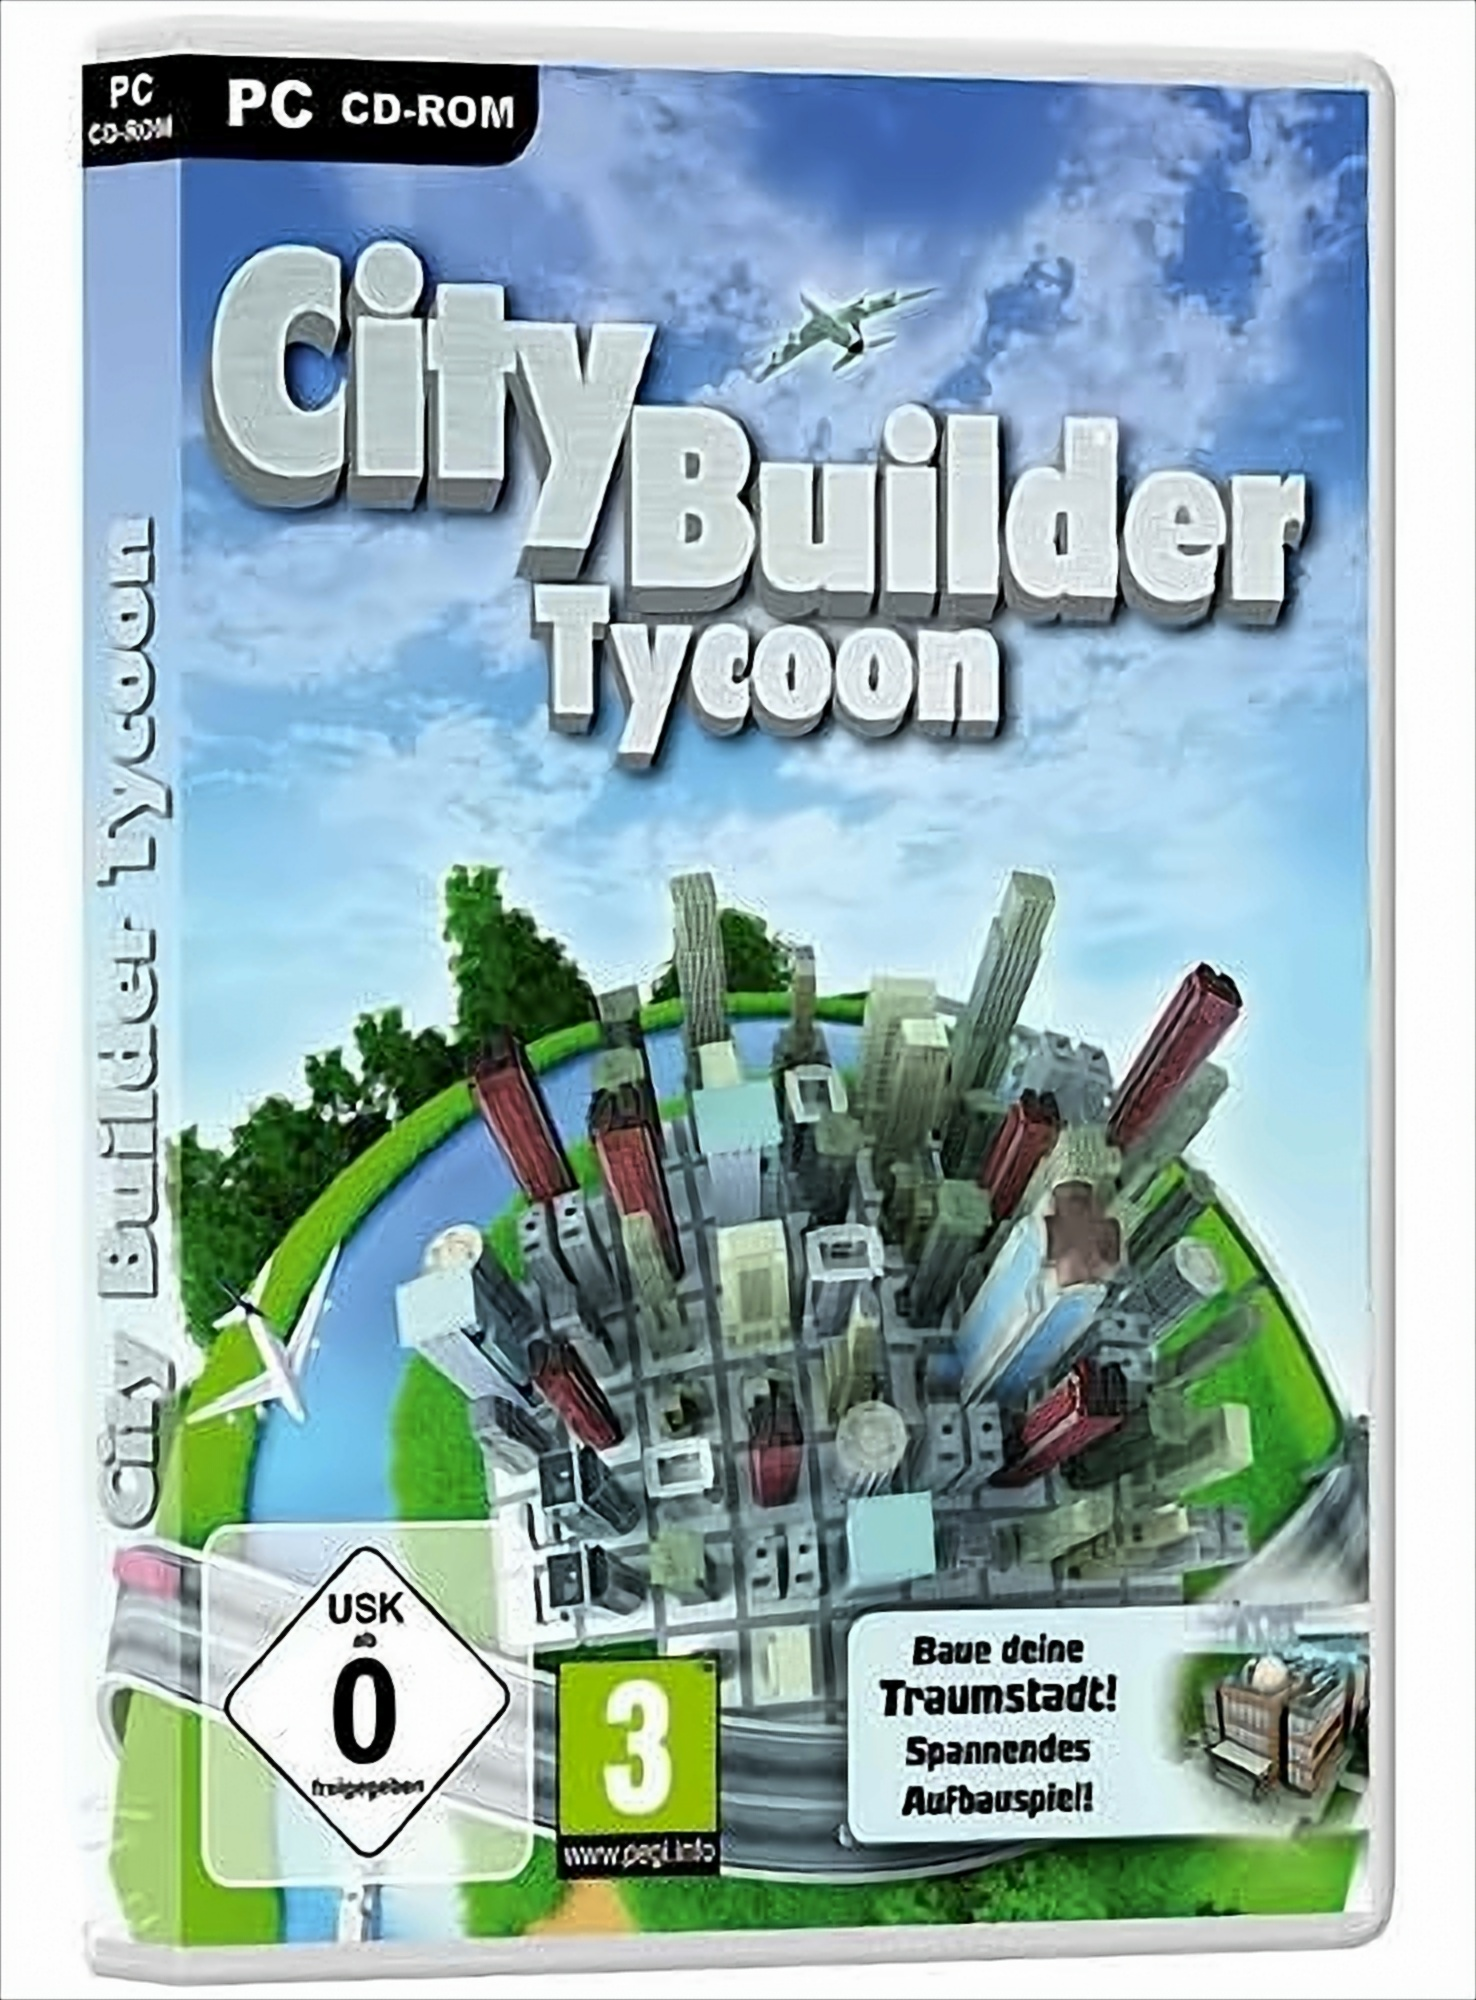 [PC] Tycoon City - Builder